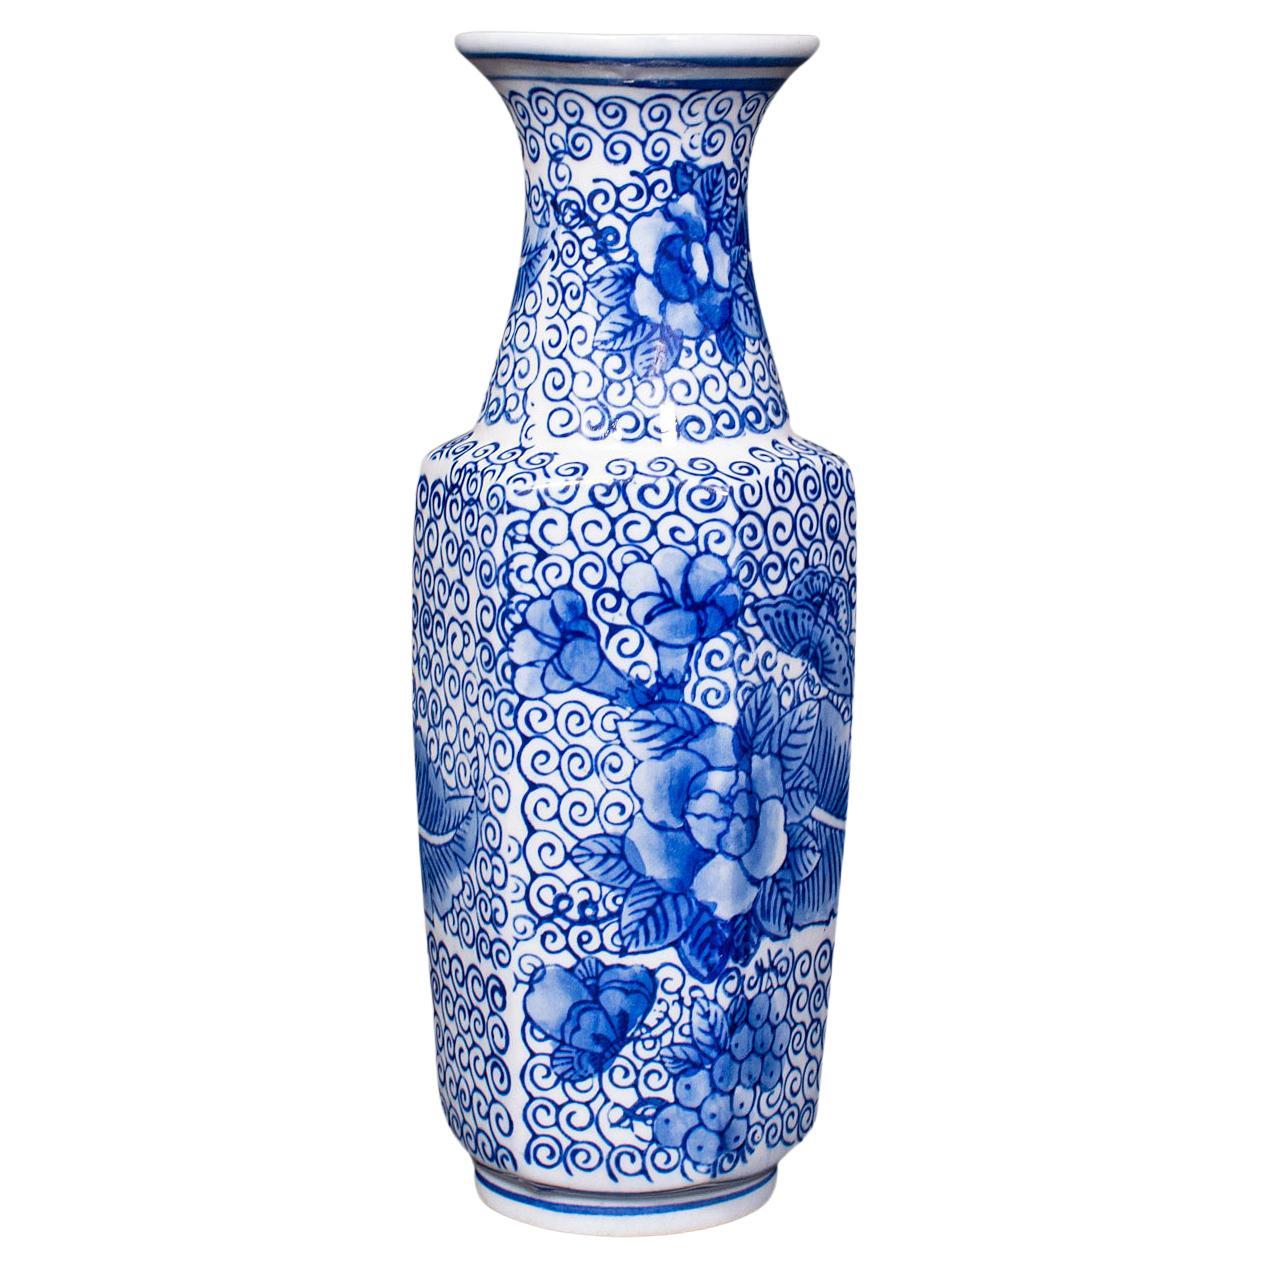 Vintage Posy Vase, Japanese, Ceramic, Flower, After Delft, Art Deco, circa 1940